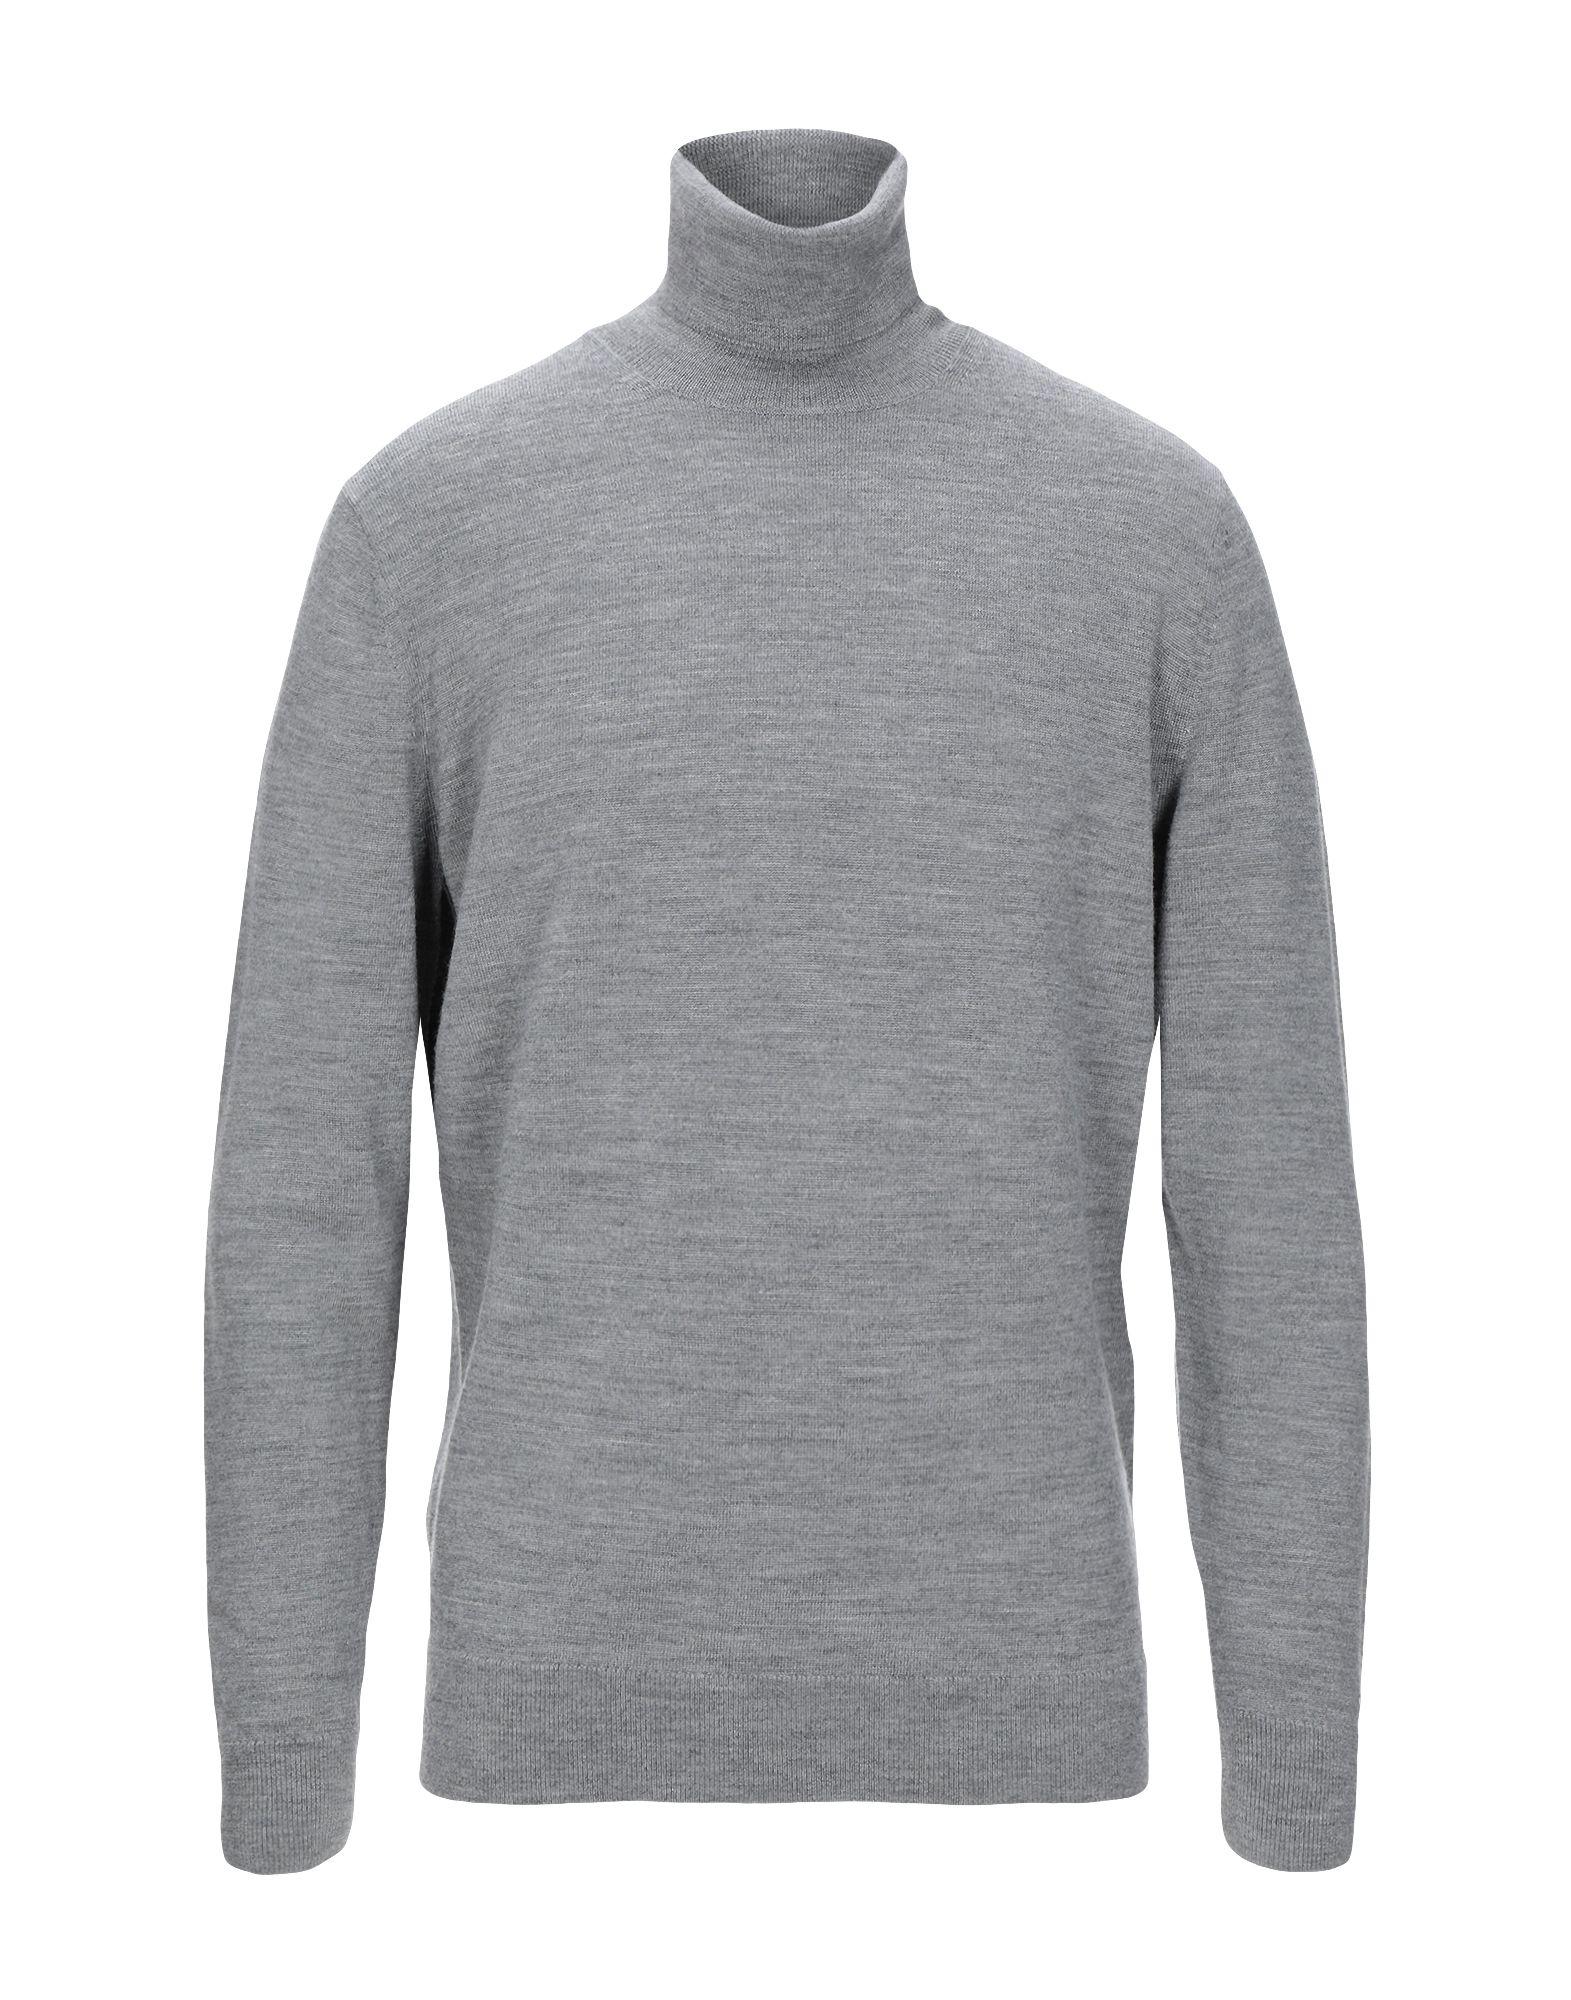 Tommy Hilfiger Wool Turtleneck in Light Grey (Gray) for Men - Lyst